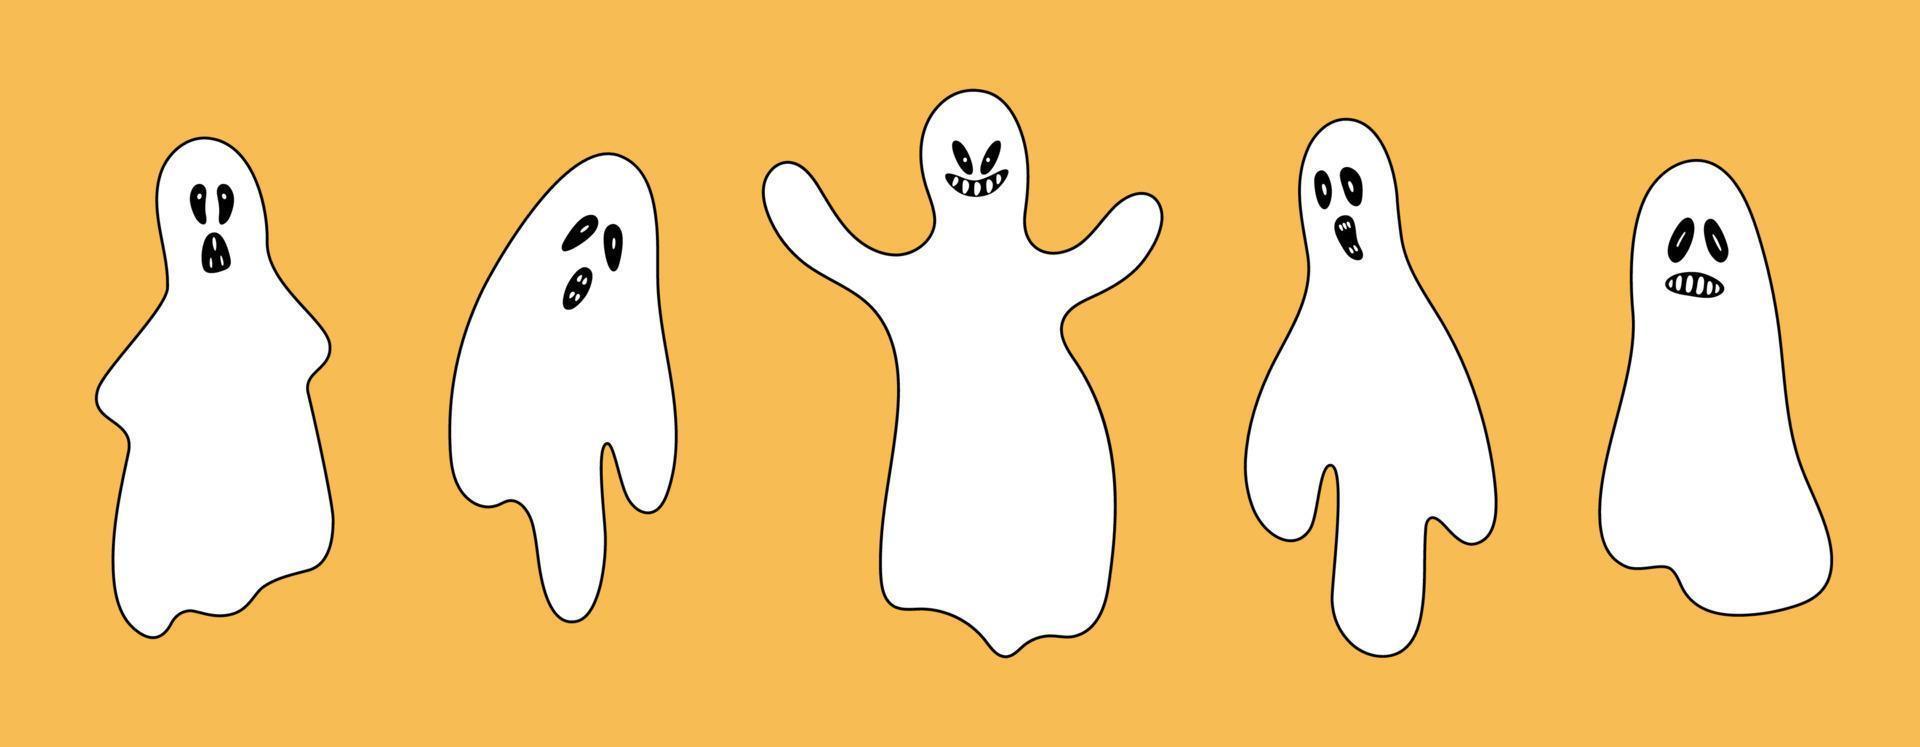 set di fantasmi spaventosi doodle raccolta di fantasmi di halloween spaventosi vettore